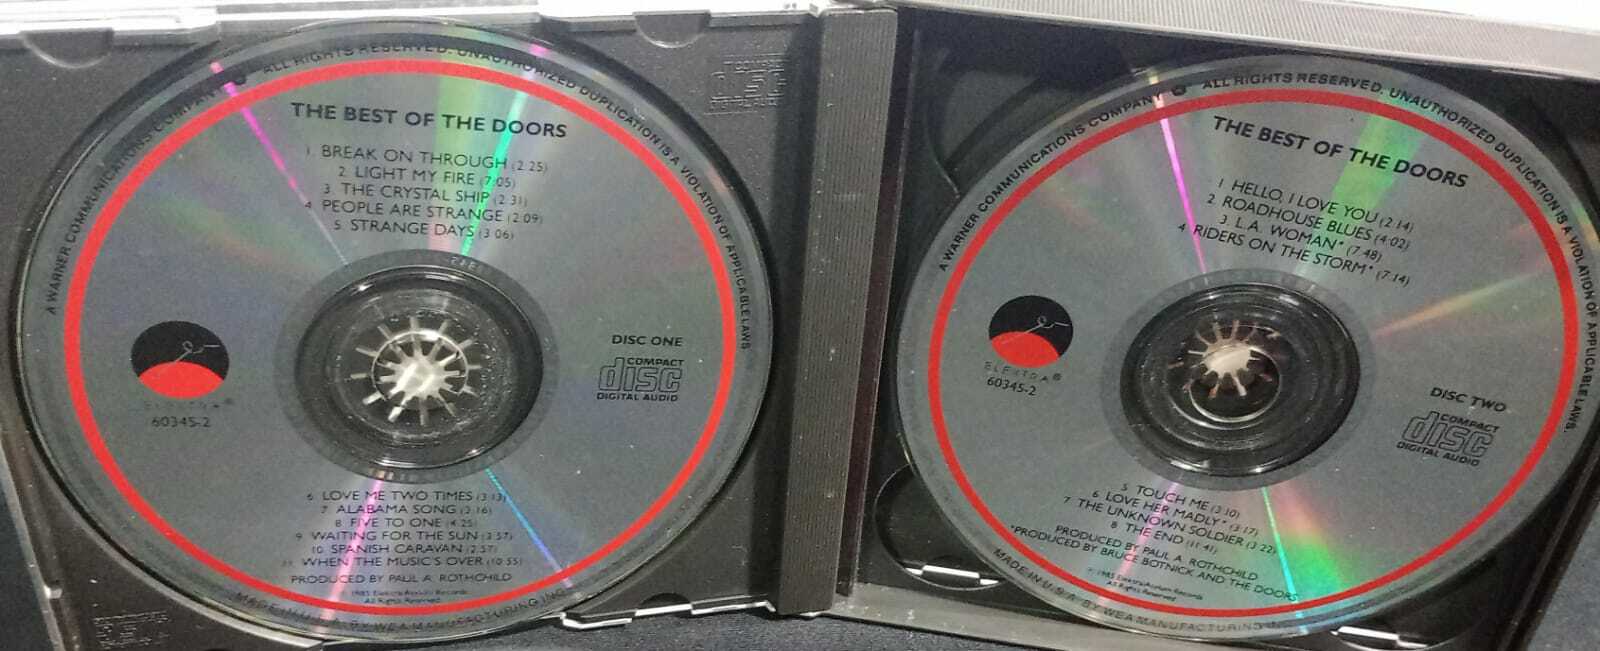 CD - Doors The - The Best Of (Duplo/USA)